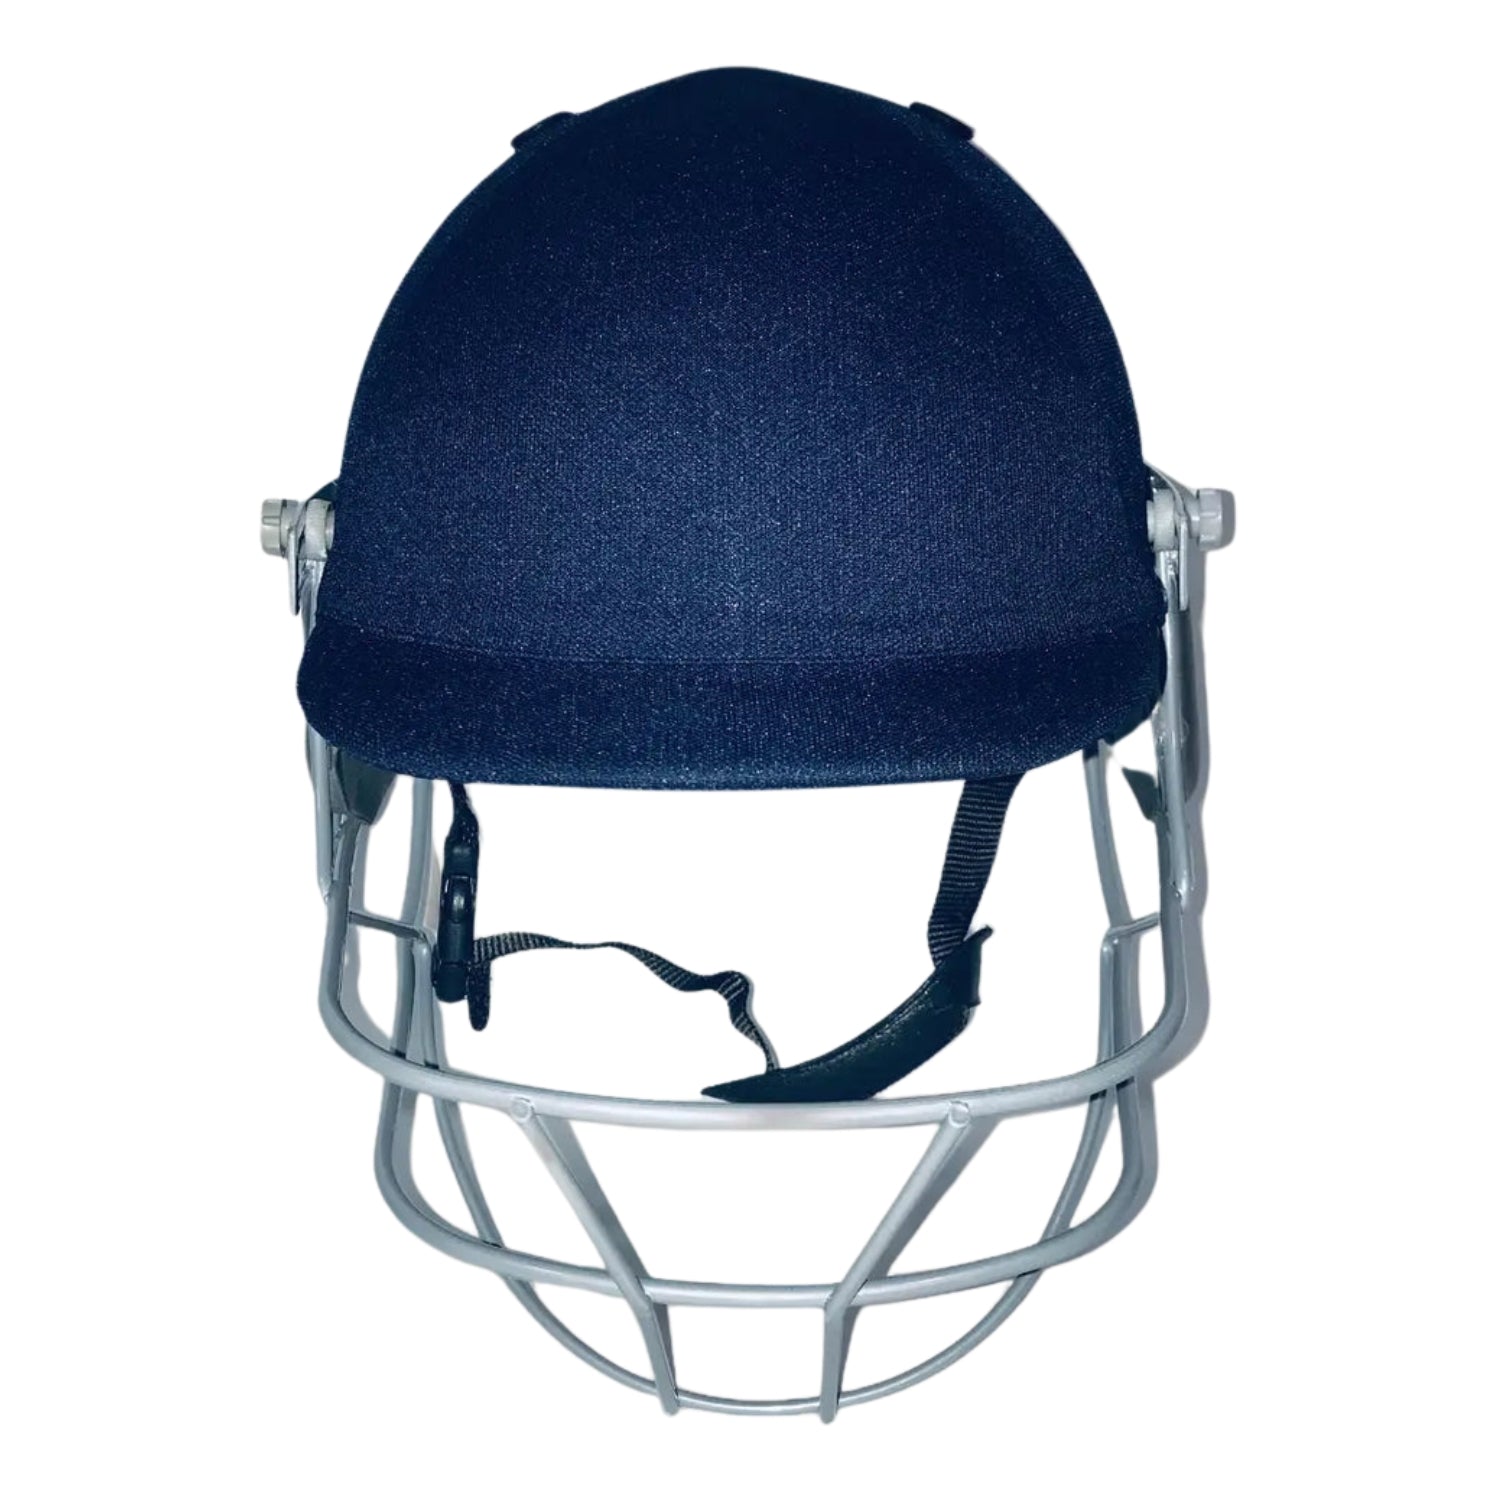 Shrey Batting Helmet, Model 2.0 Match, Adult Navy Blue